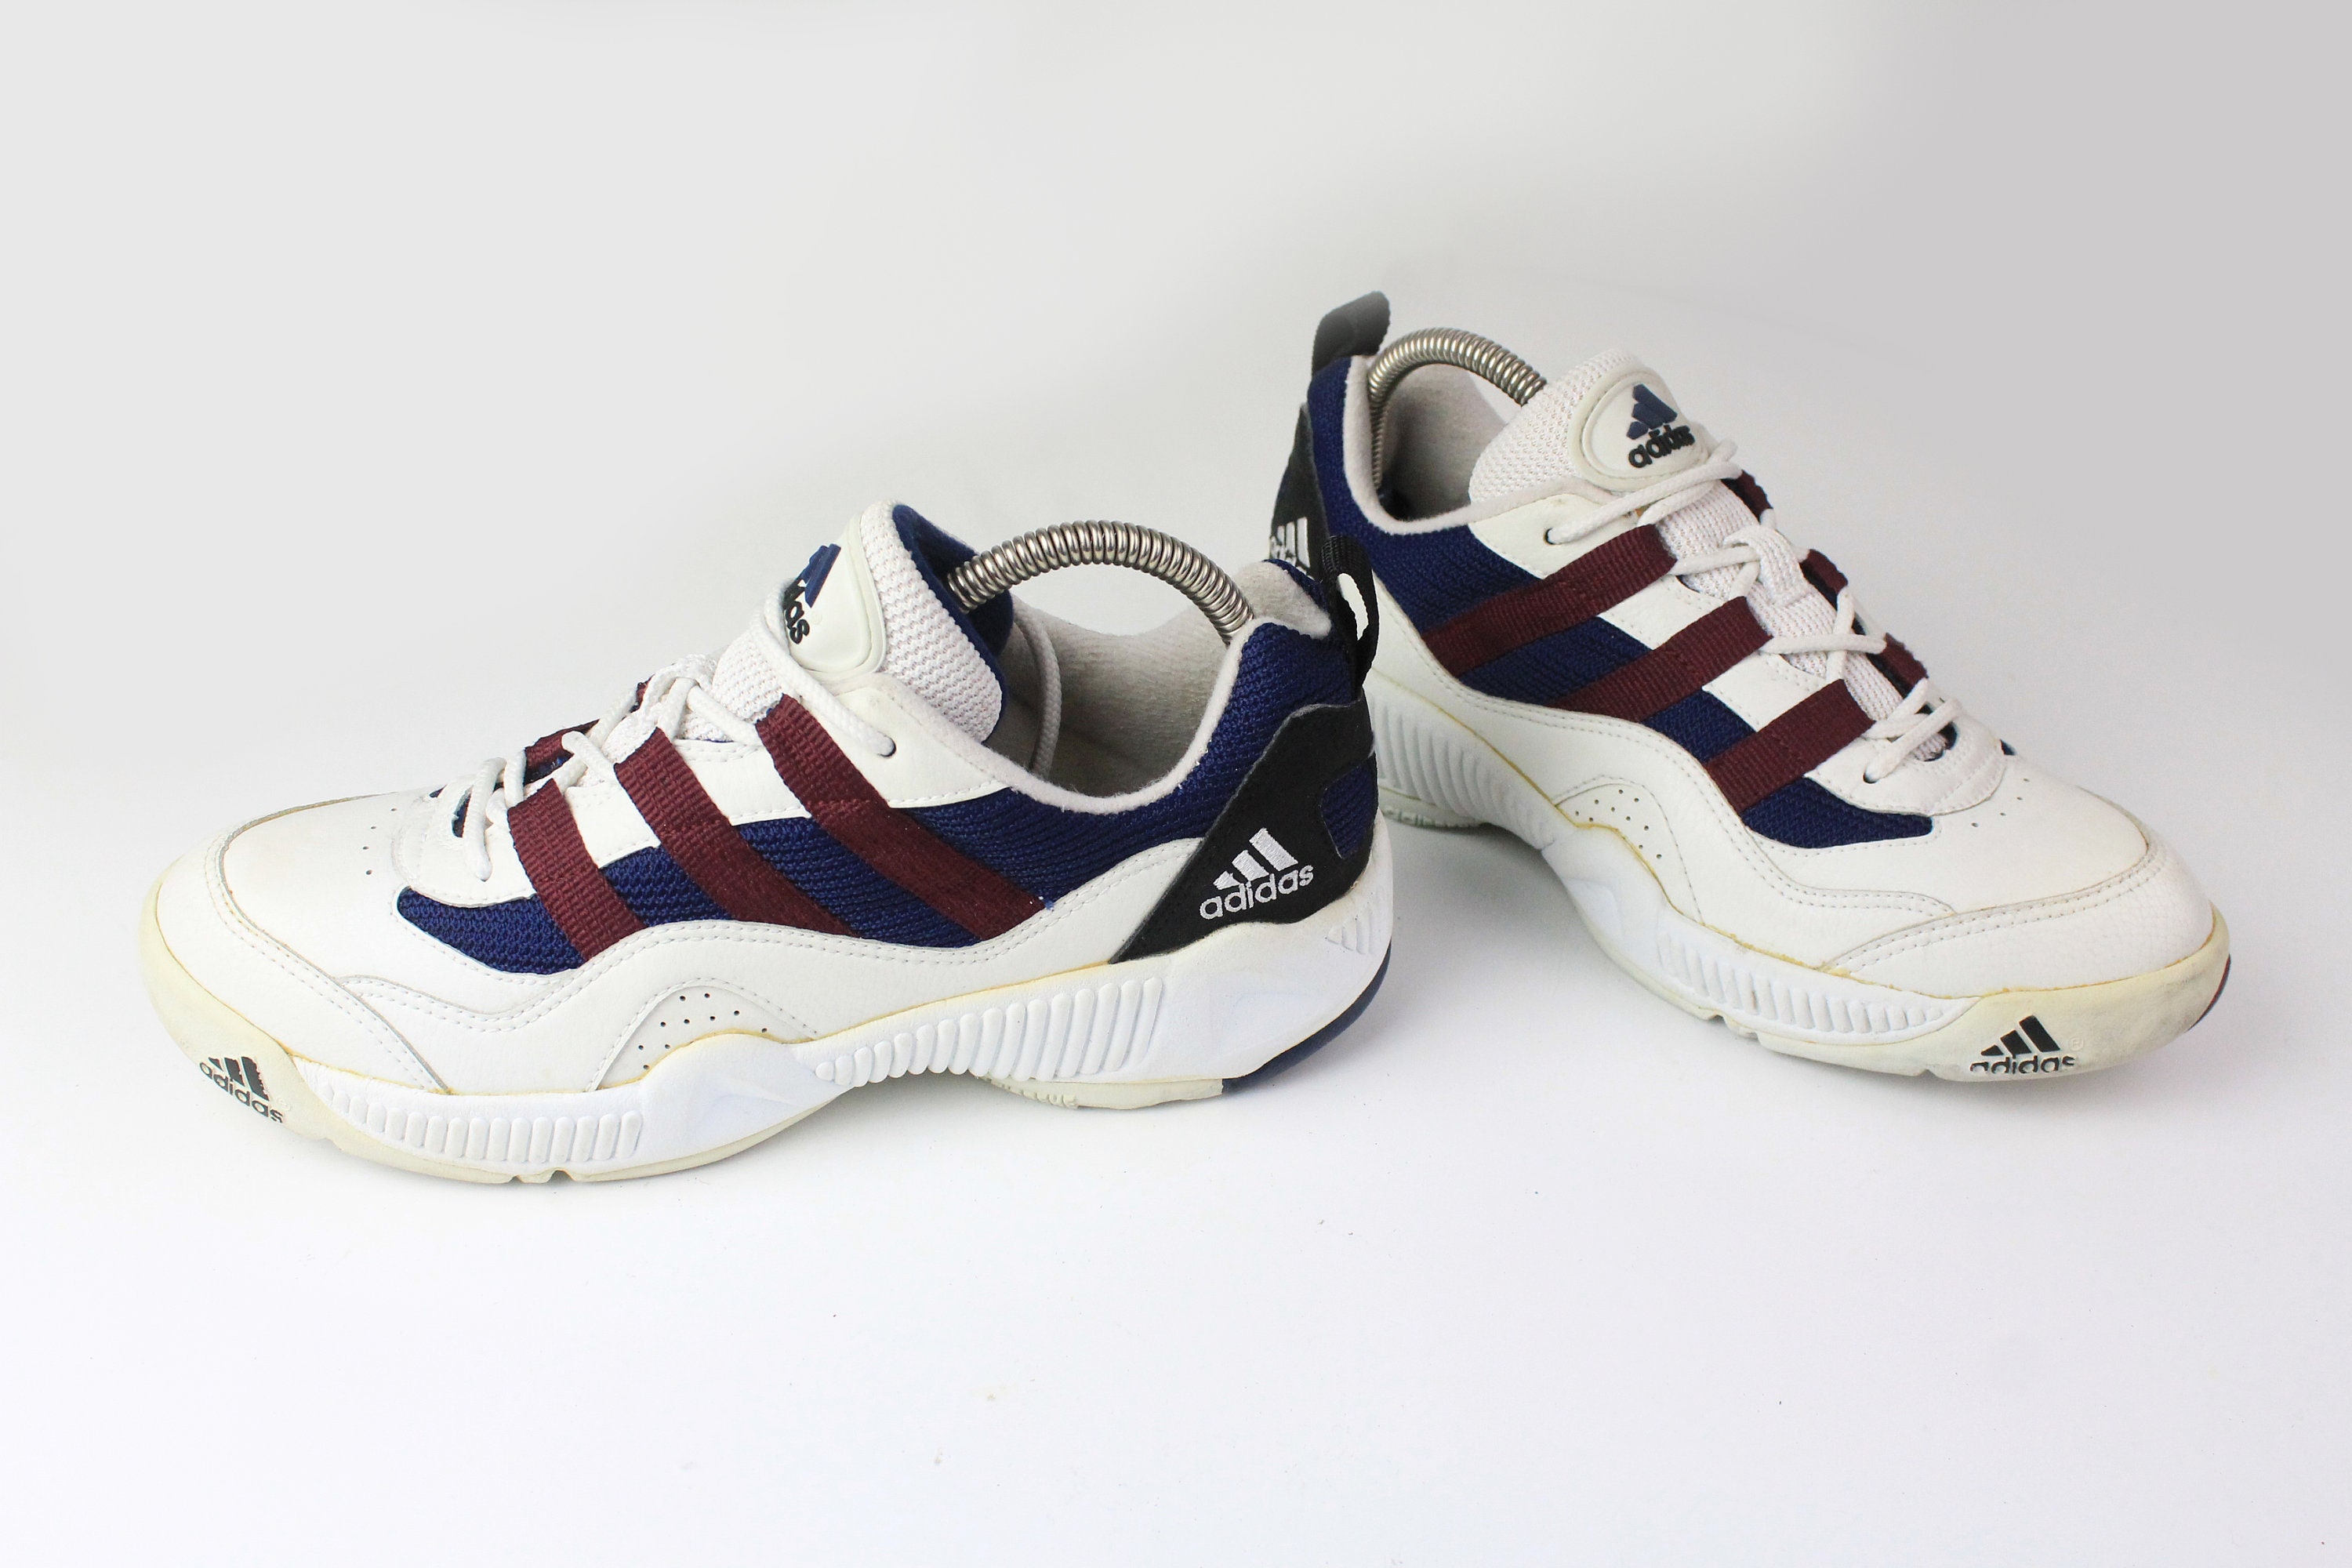 Кроссовки адидас из 90 х. Adidas 90s Sneakers. Купить кроссовки адидас Трейл фото 90-х в Москве.